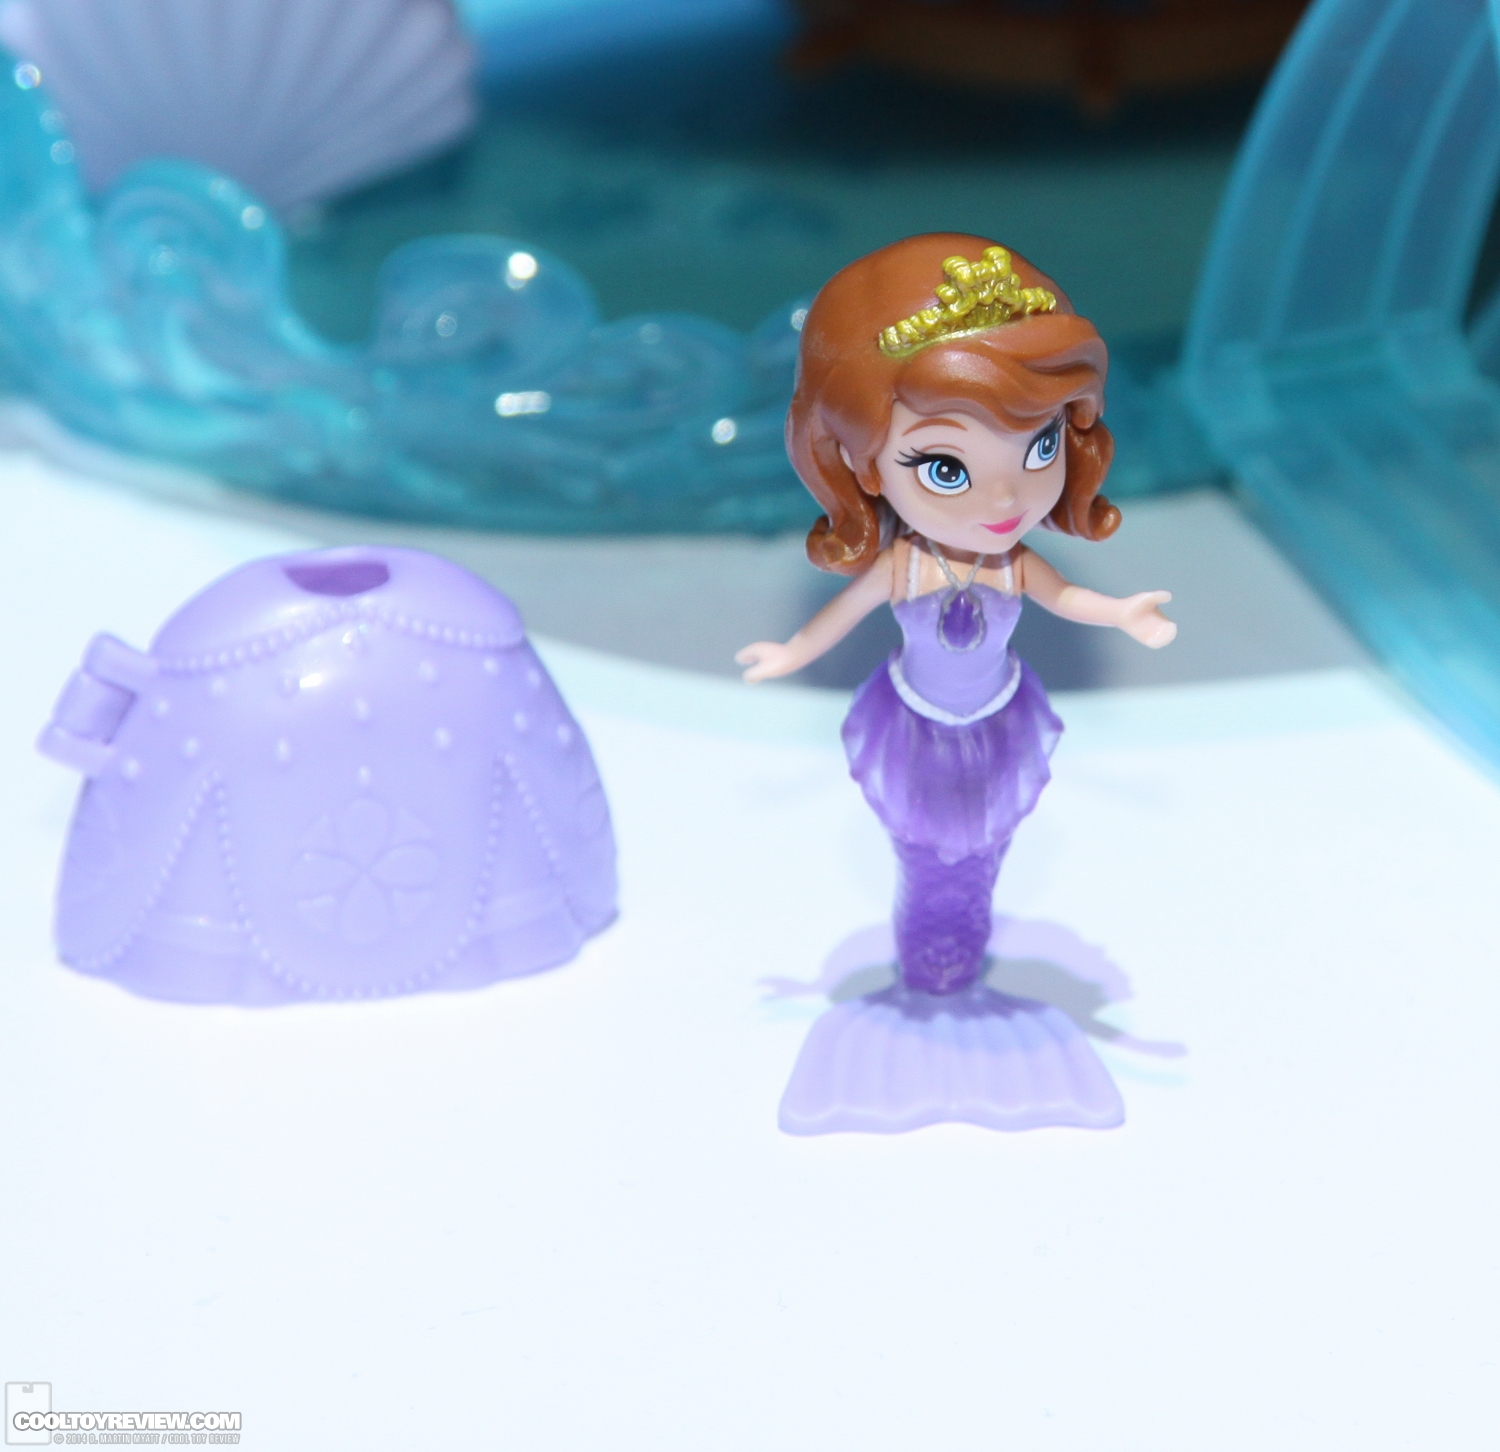 Toy-Fair-2014-Mattel-Showroom-271.jpg